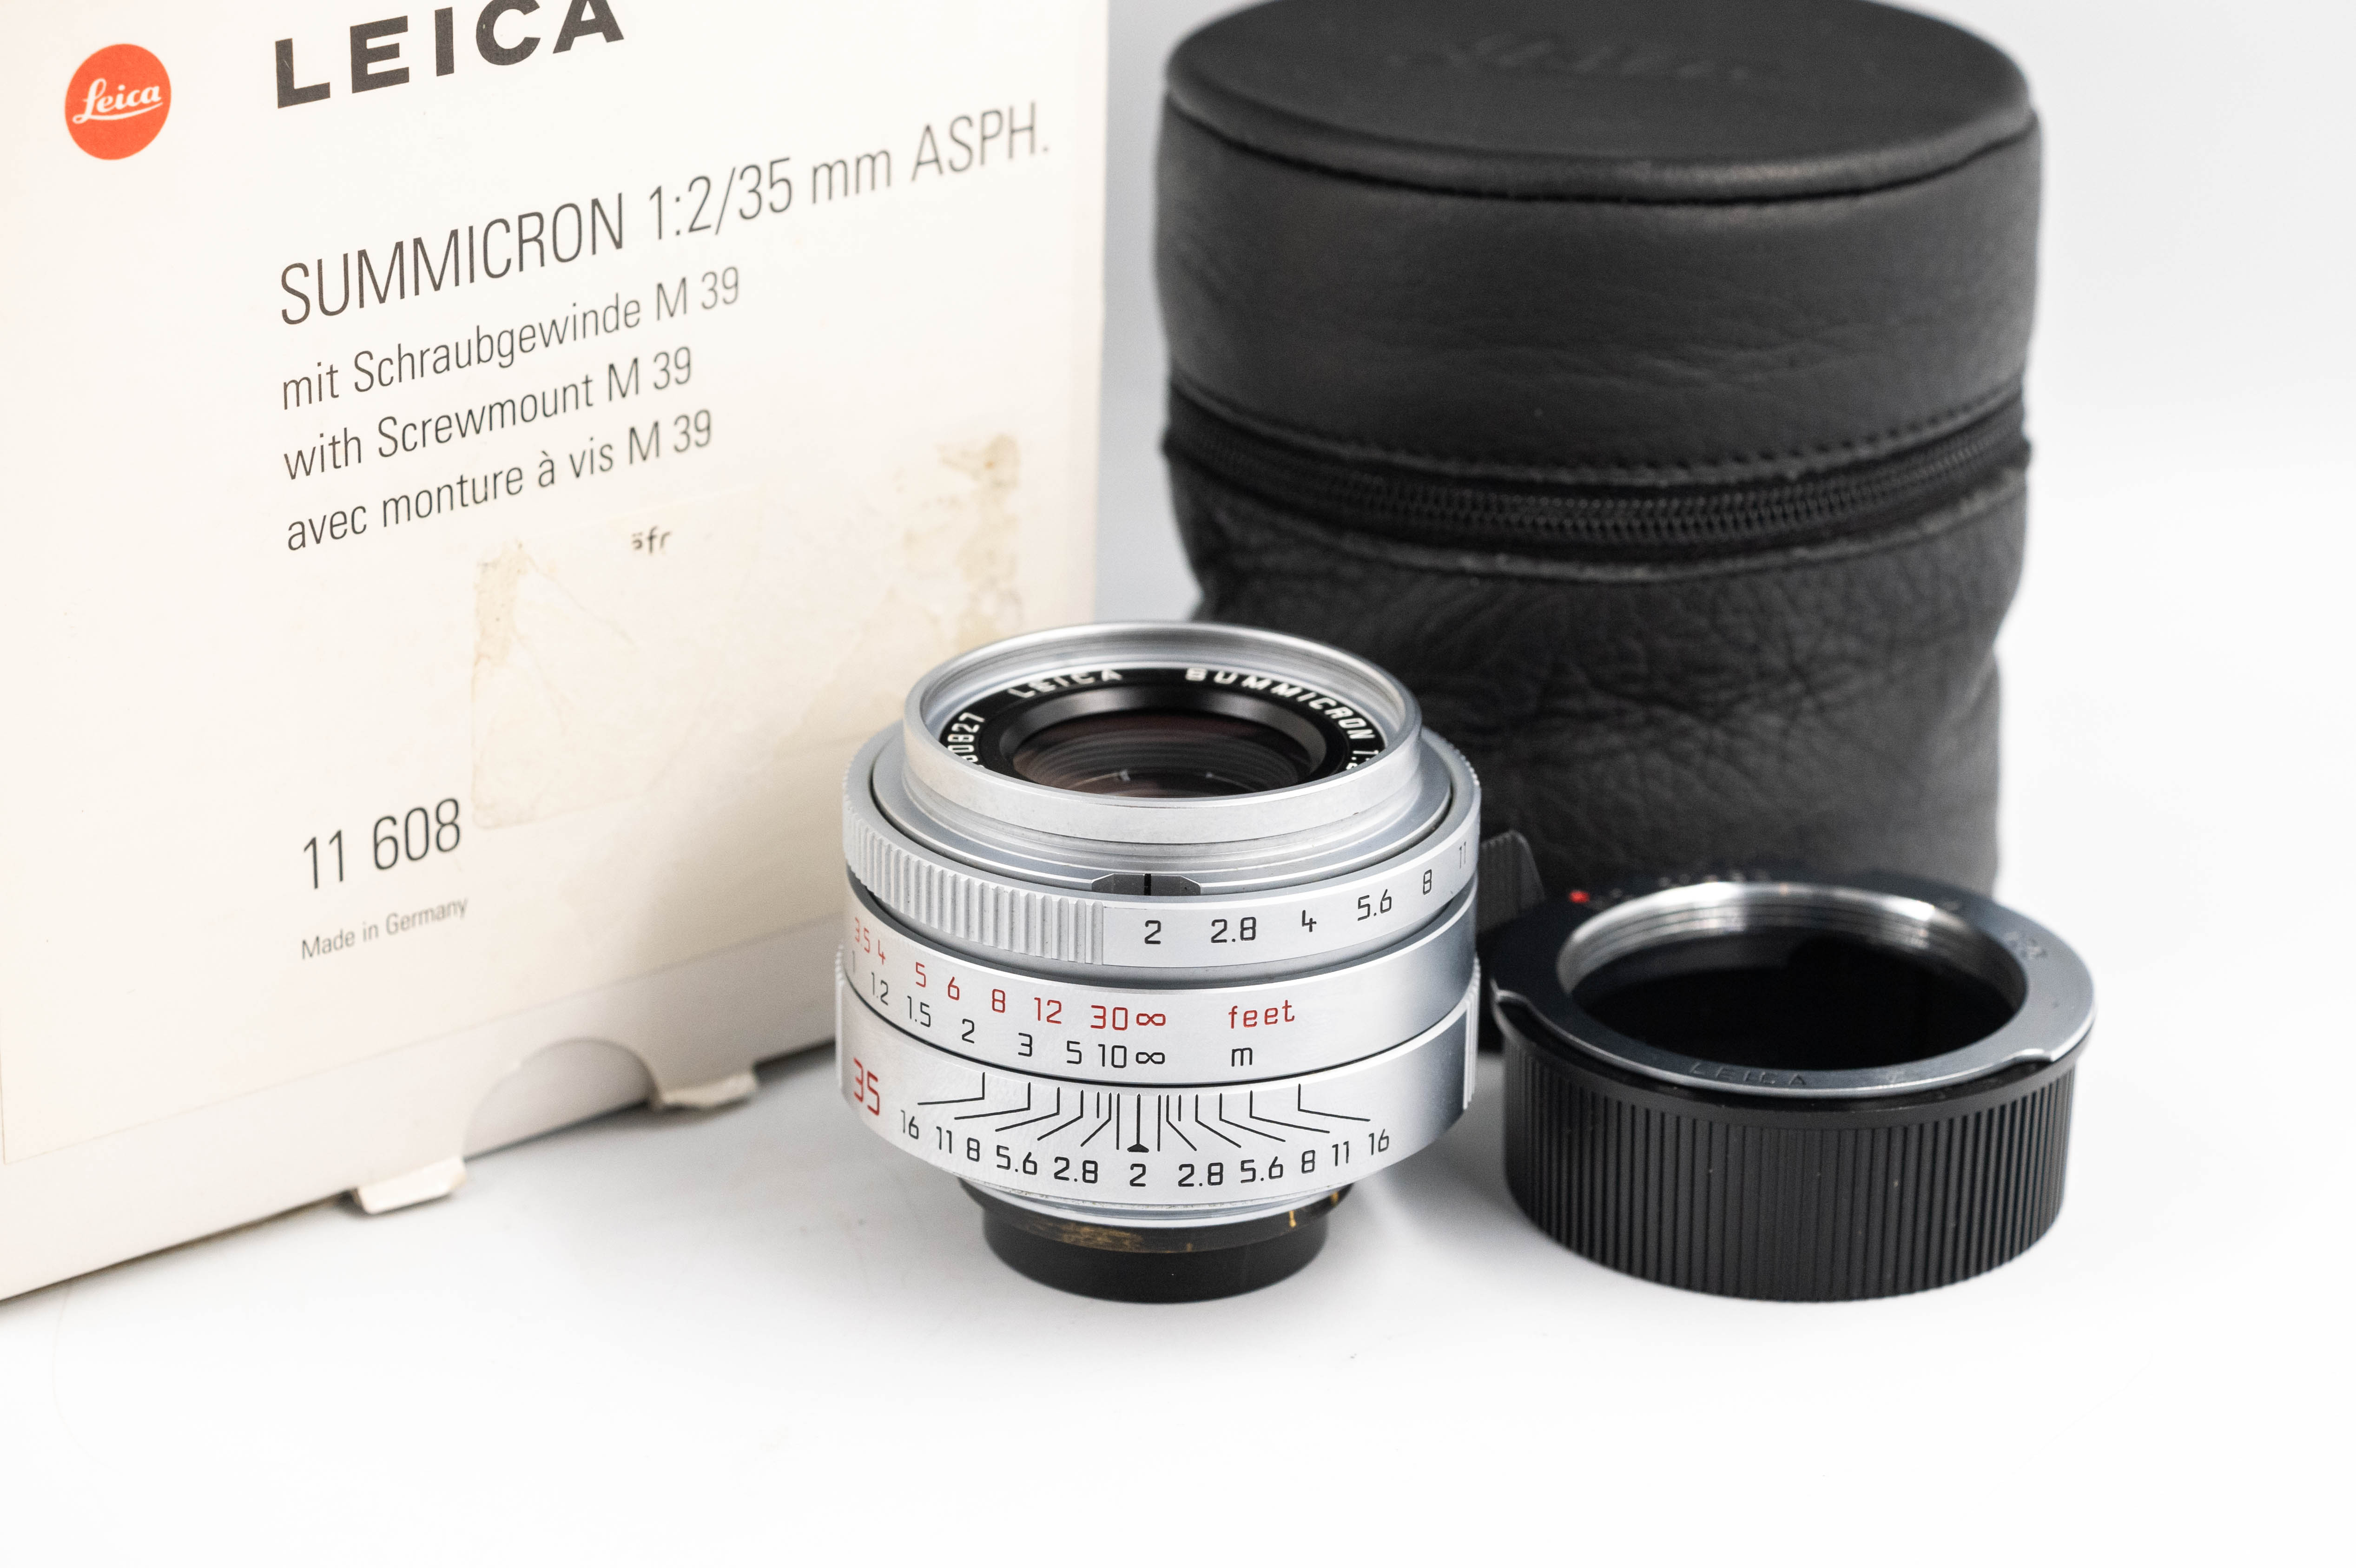 Leica Summicron 35mm f/2 ASPH M39 11608